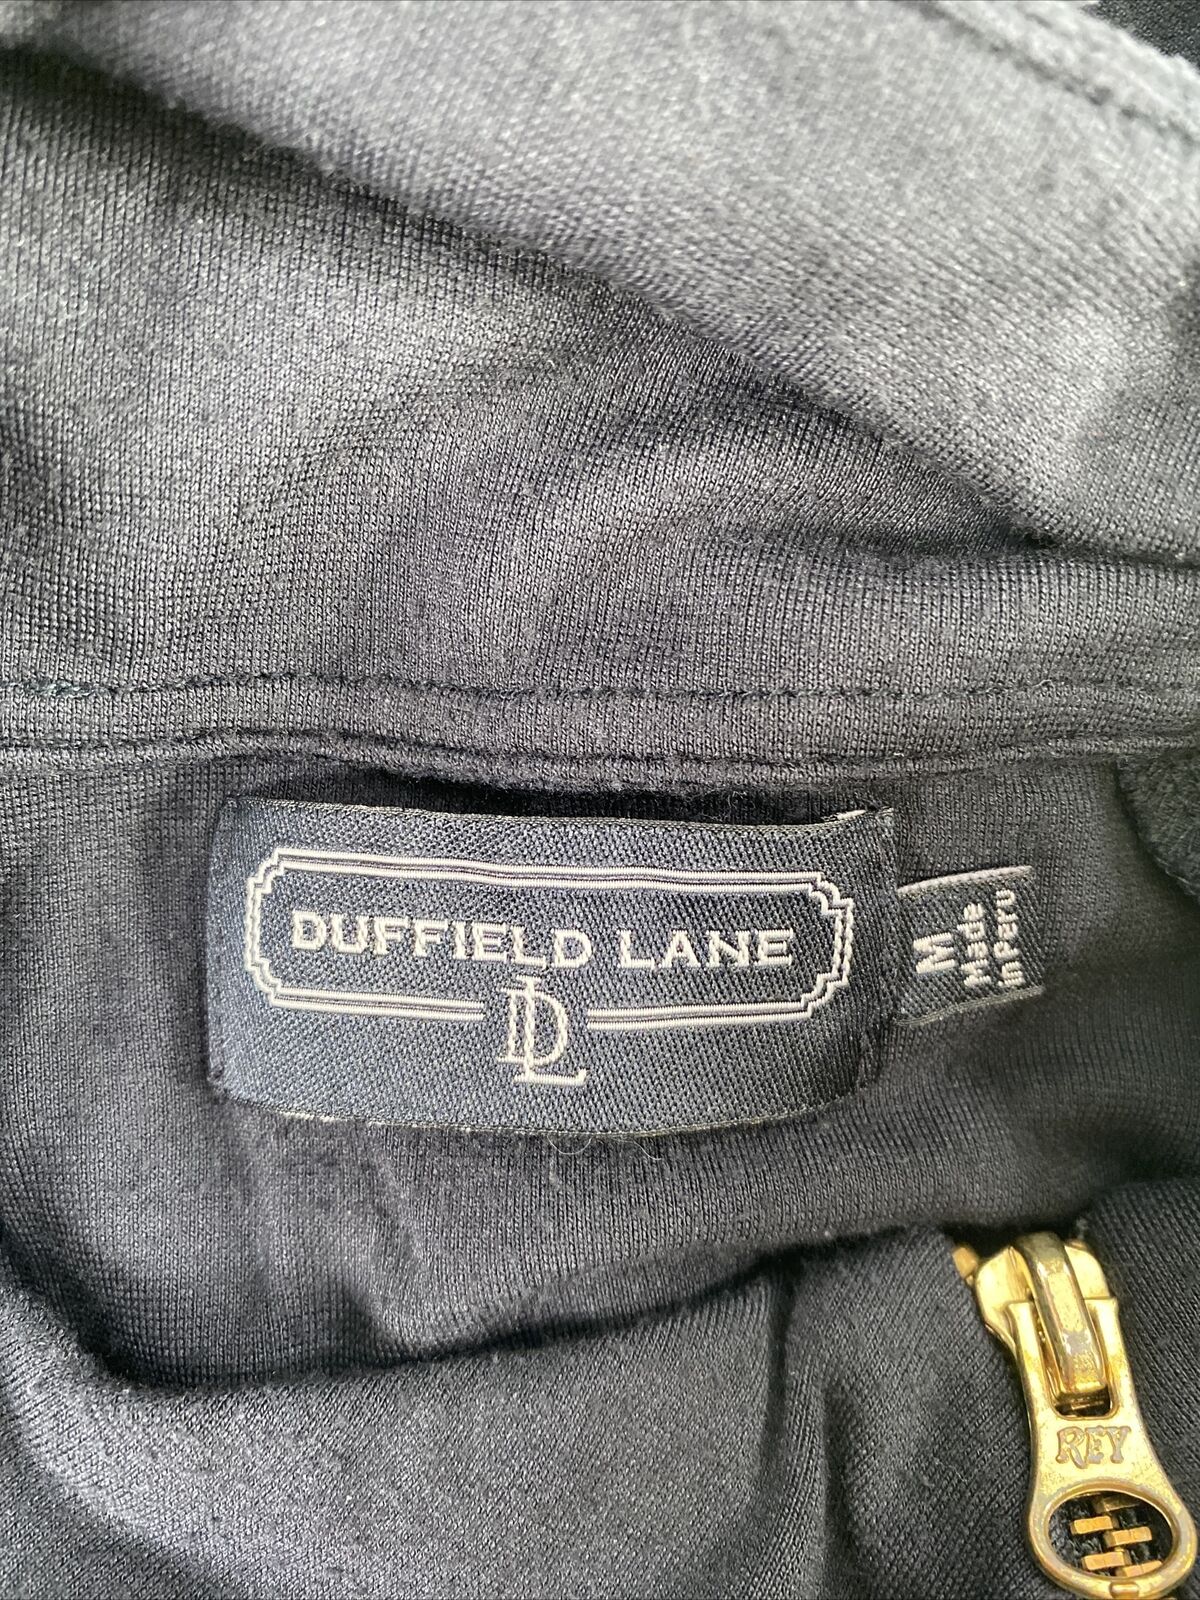 Duffield Lane Women's Blue Long Sleeve Front Casual Shirt - M